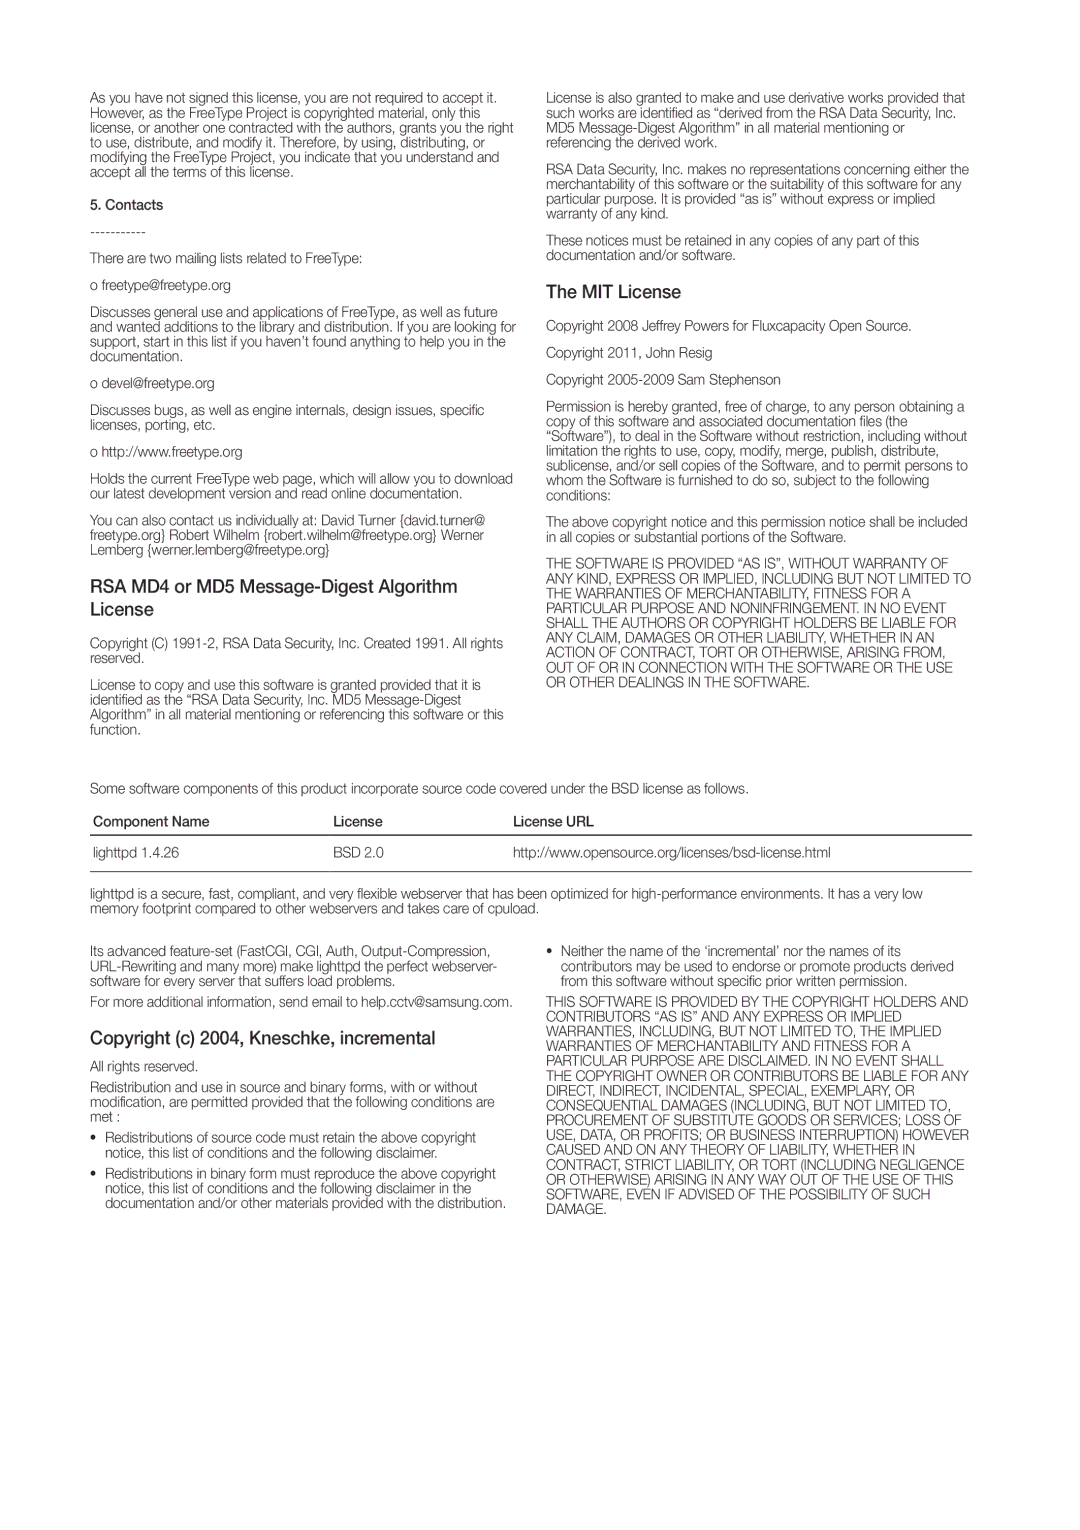 Samsung SDHP4080 RSA MD4 or MD5 Message-Digest Algorithm License, MIT License, Copyright c 2004, Kneschke, incremental 